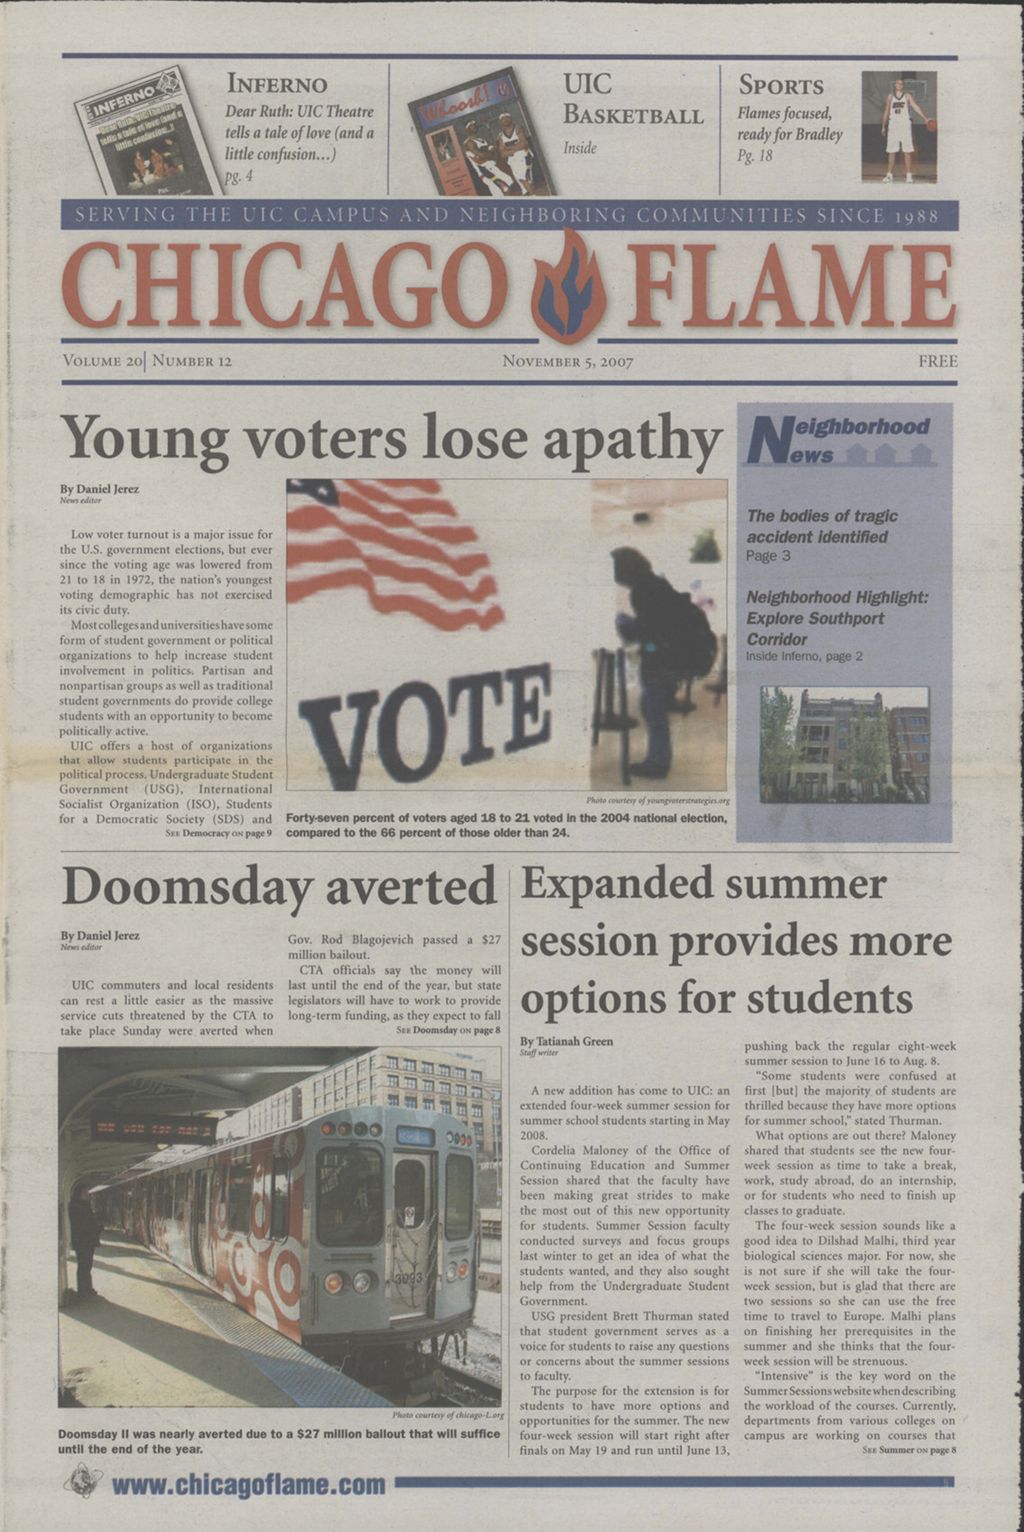 Miniature of Chicago Flame (November 5, 2007)